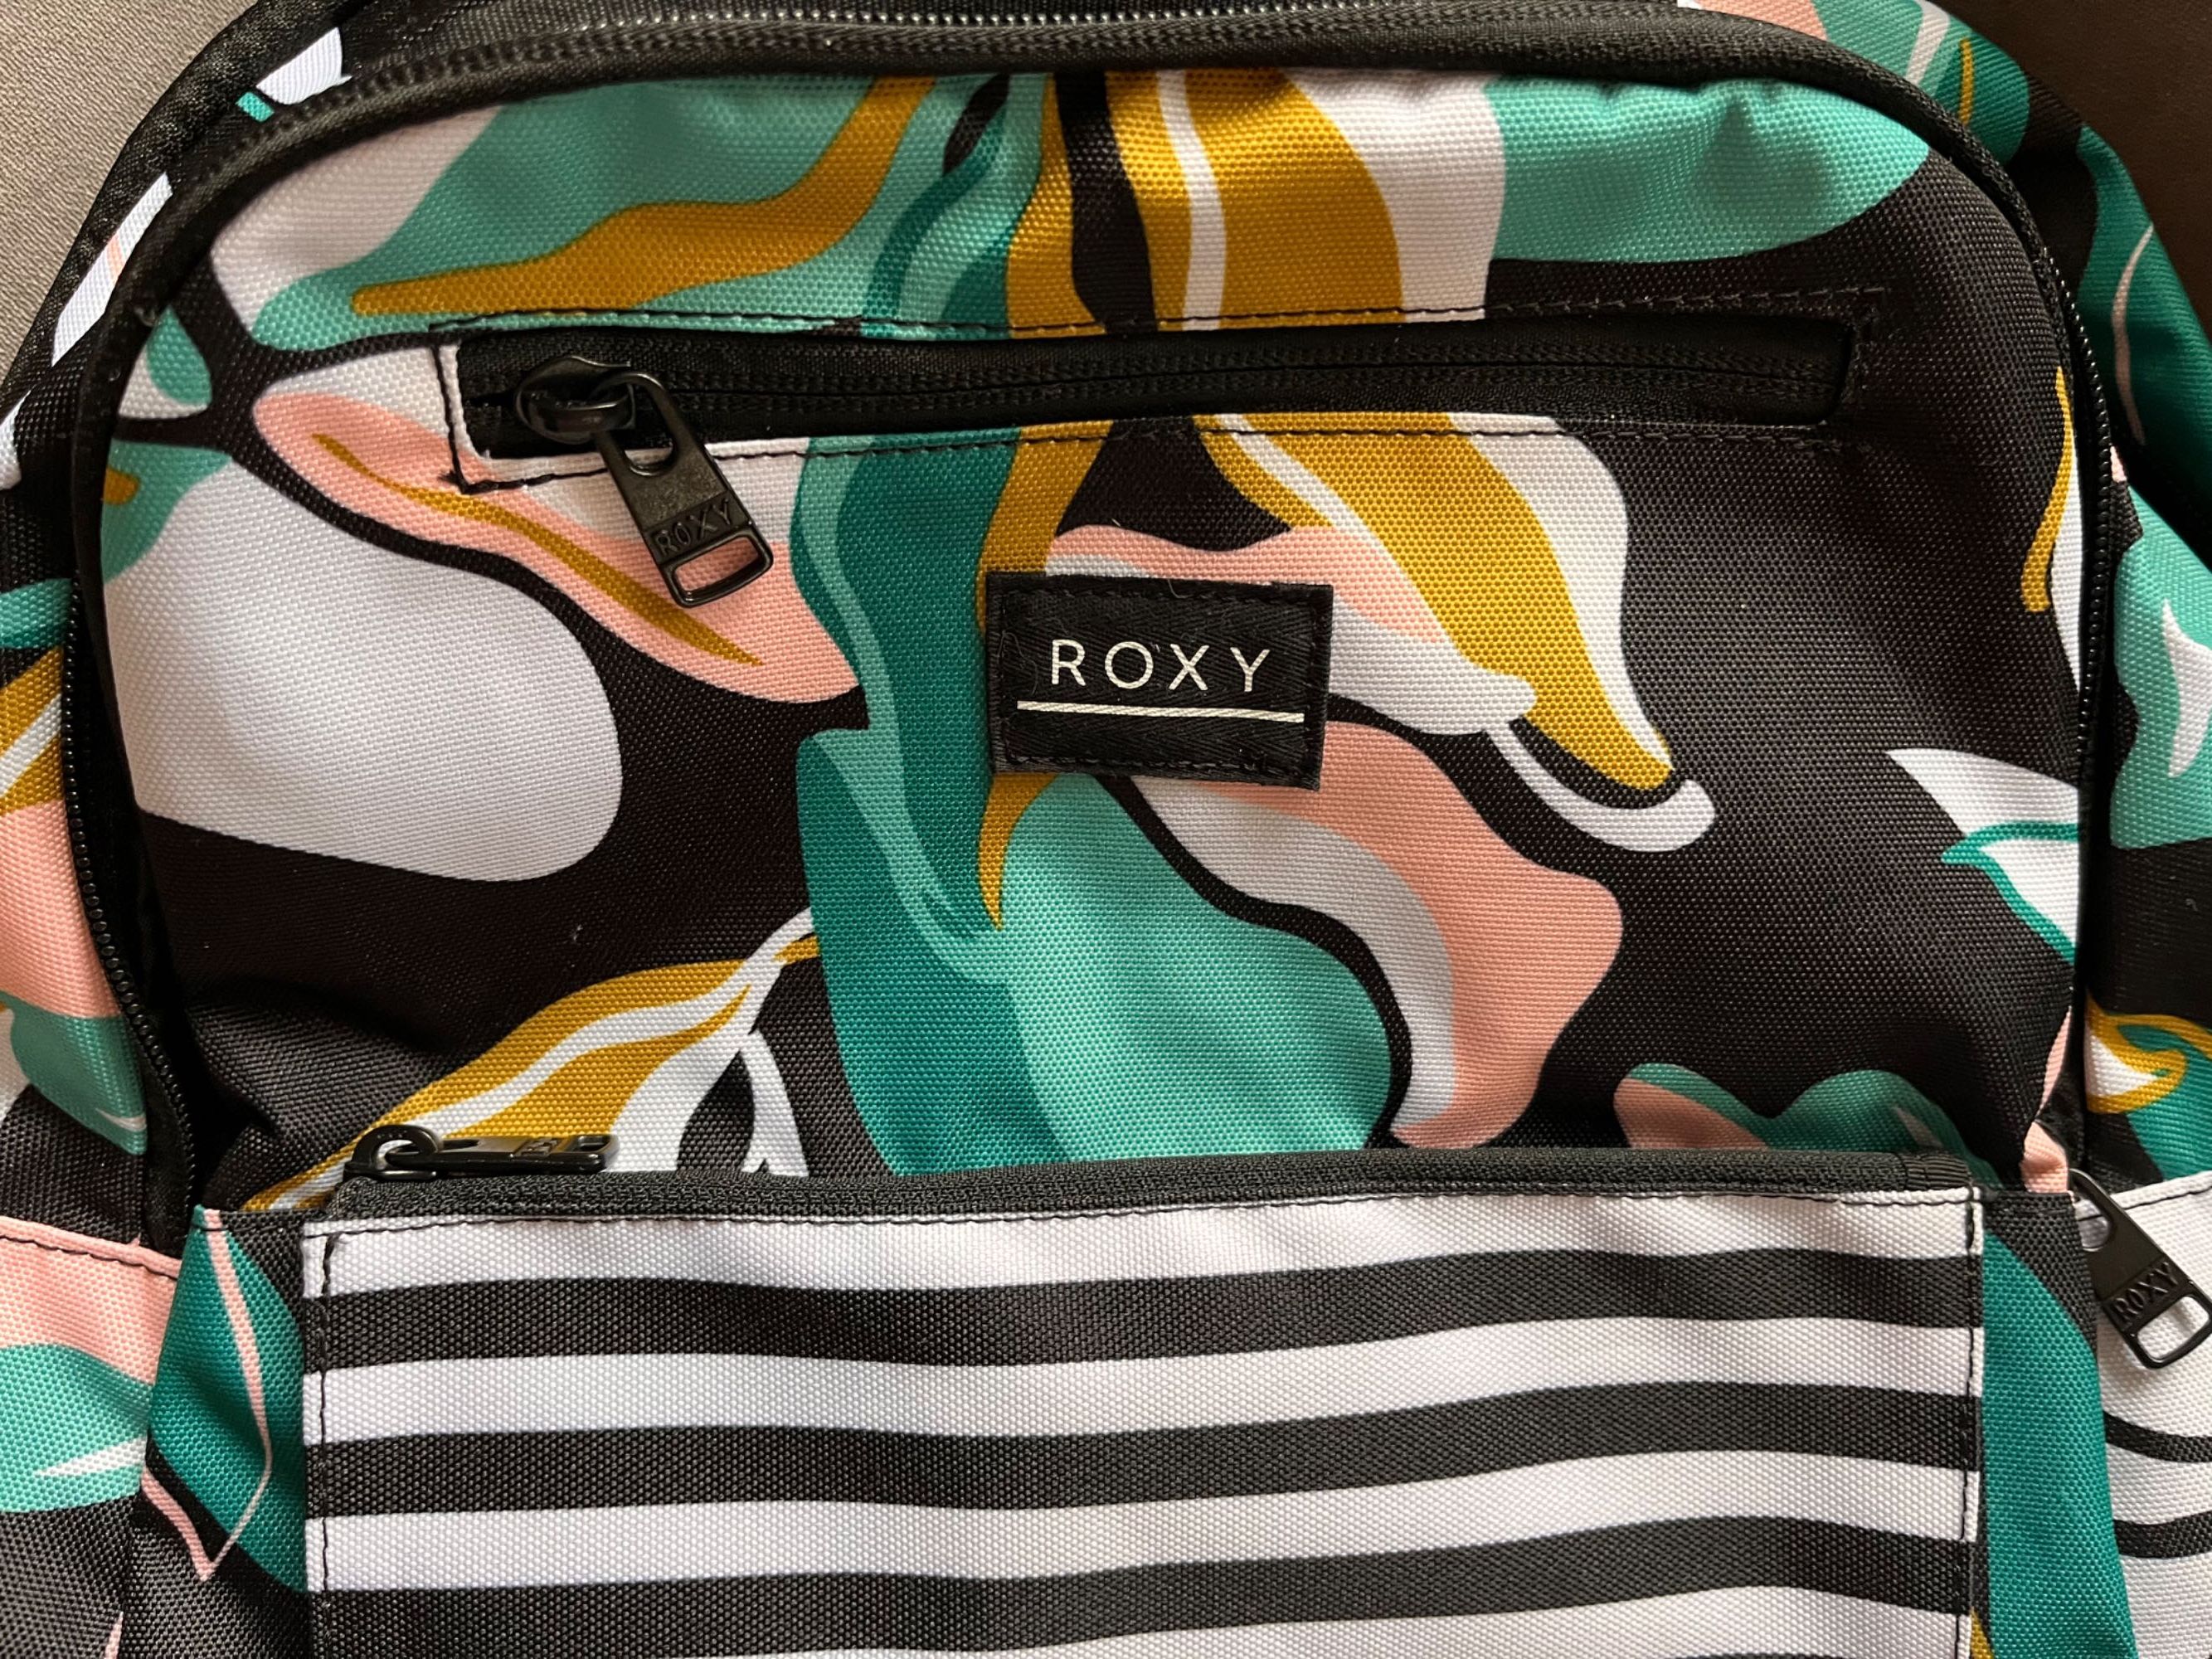 Plecak Roxy nowy